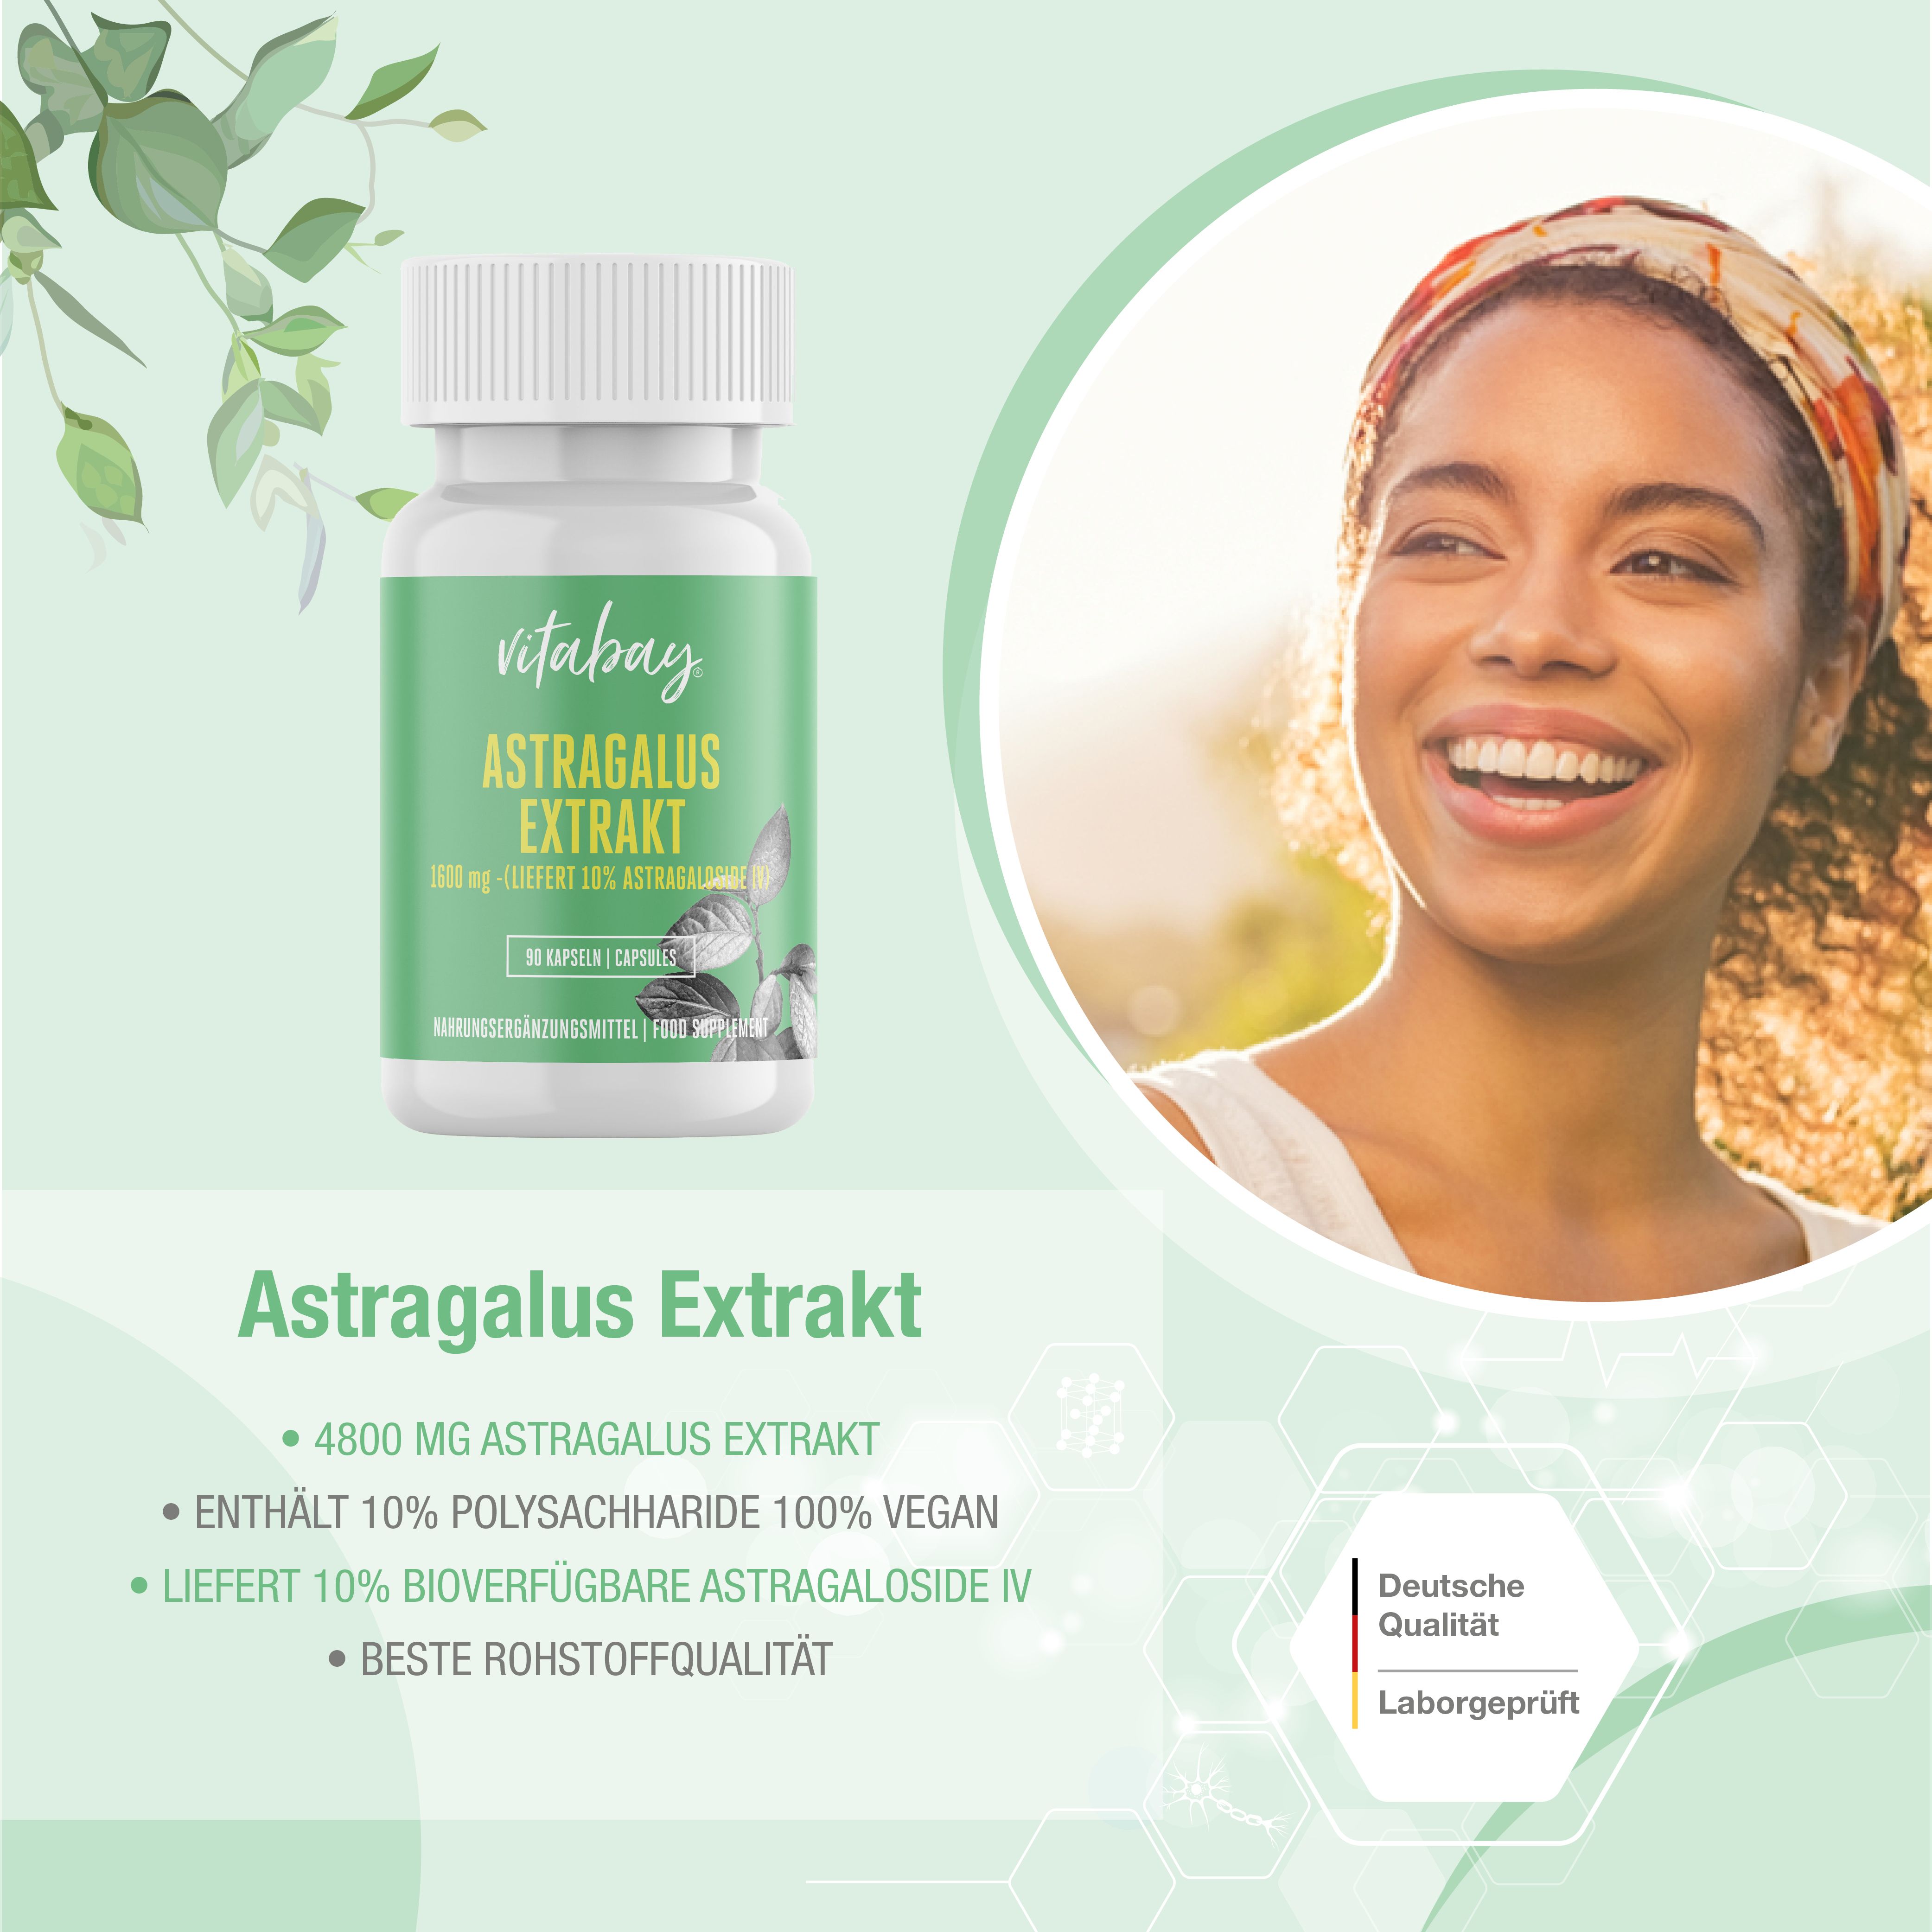 Vitabay Astragalus Extrakt 1600 mg